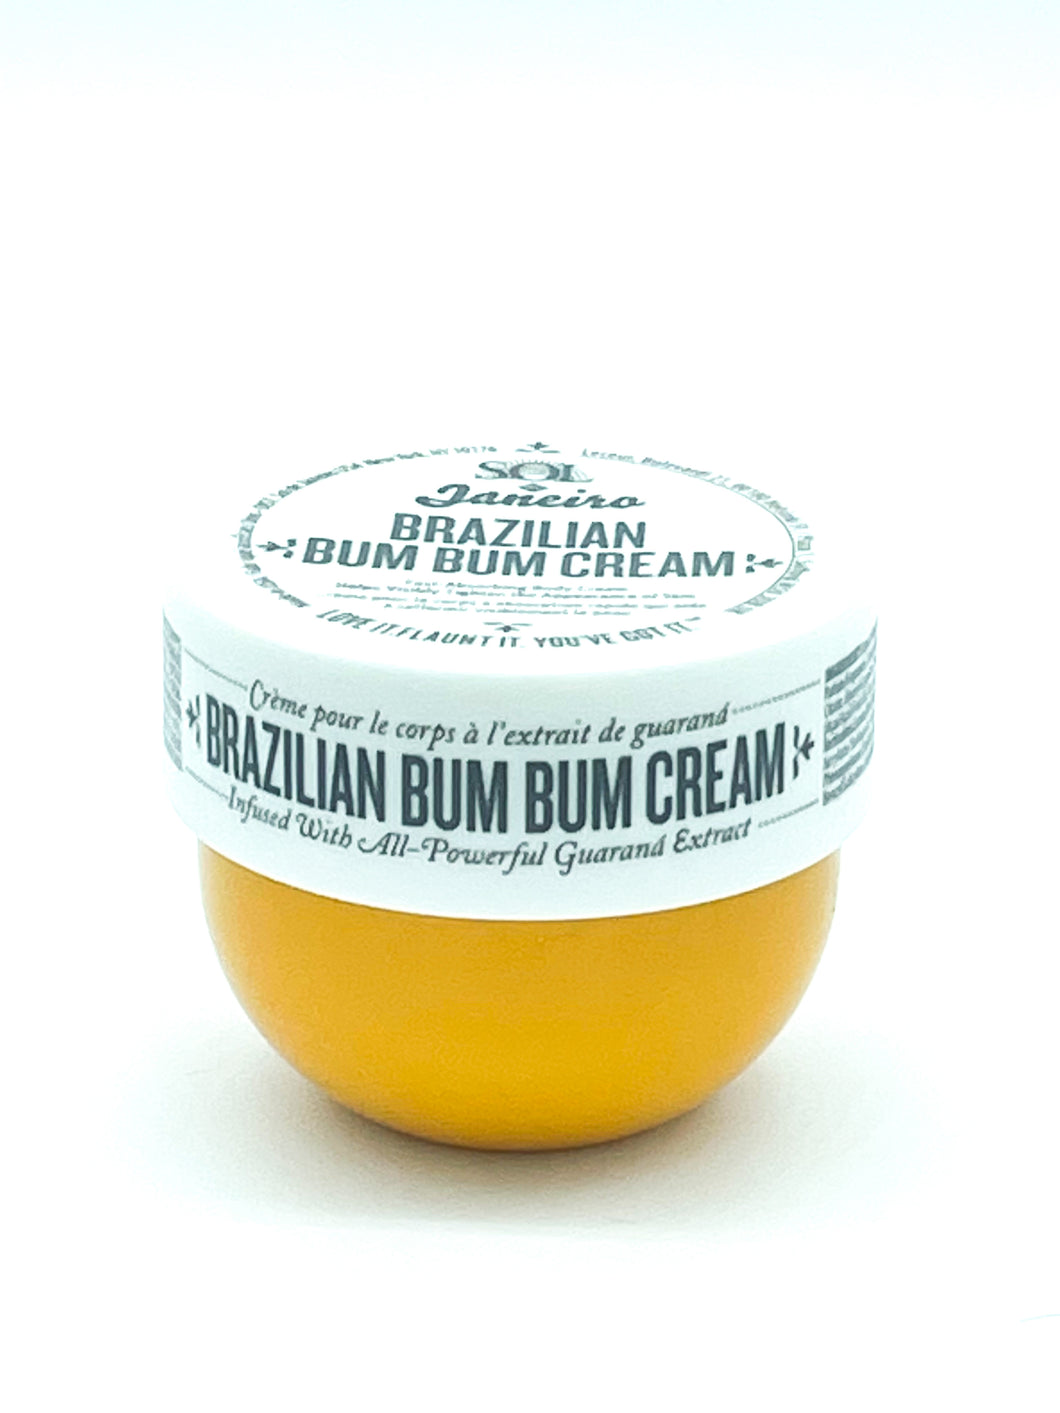 Brazilian bum bum cream |Ssample size